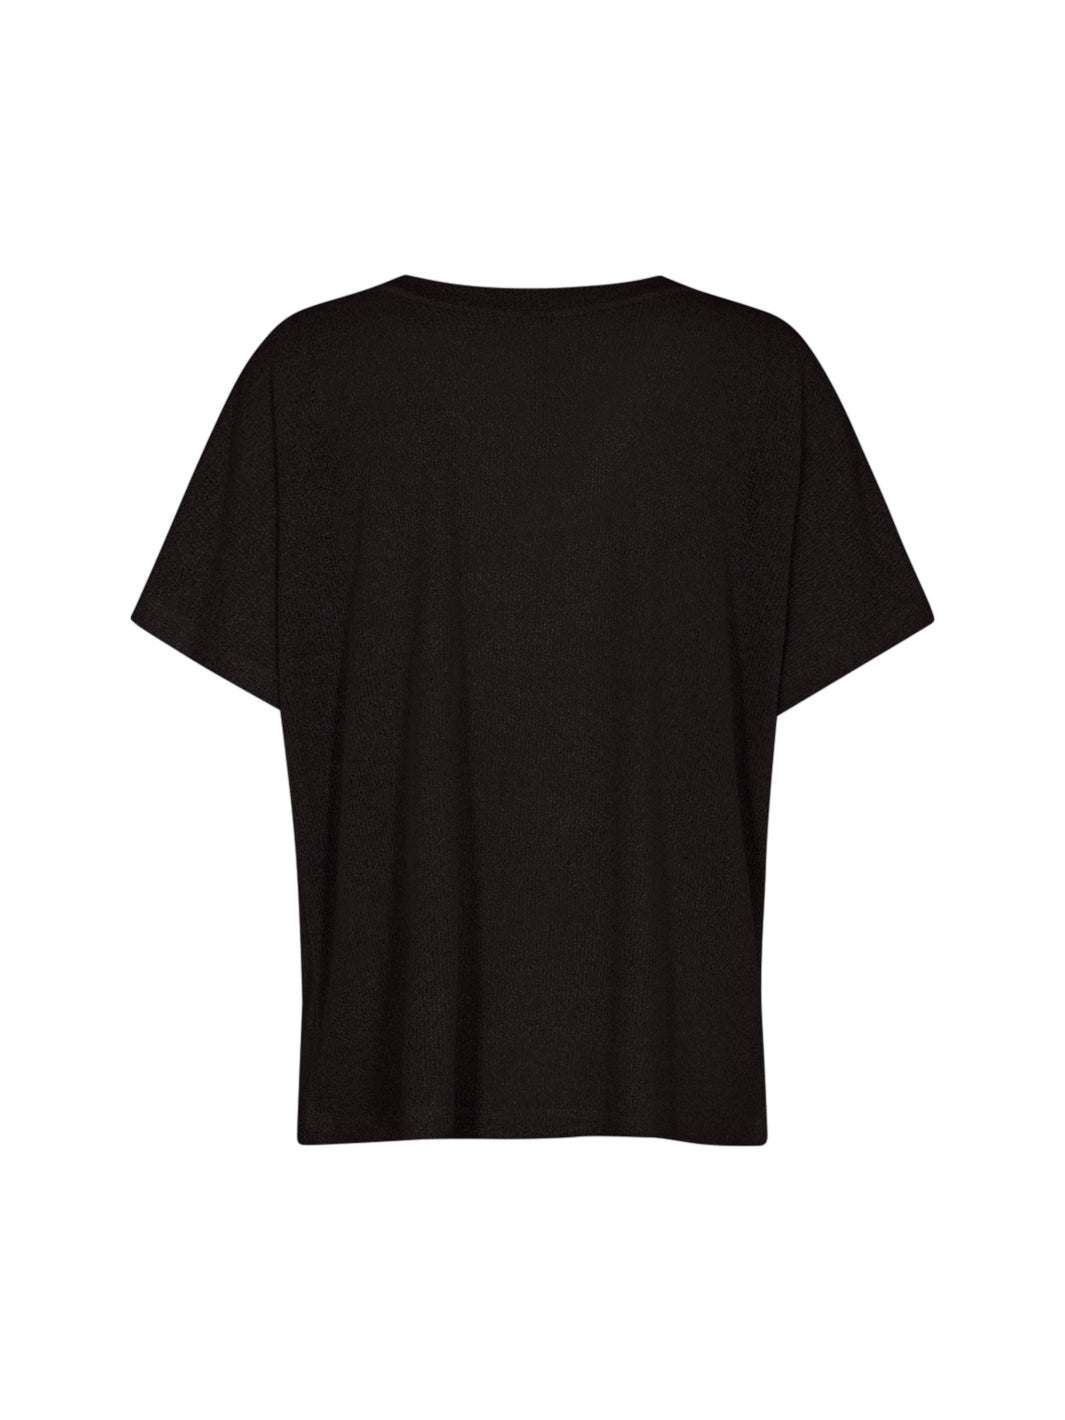 Soya Concept Delia 1 t-shirt black - Online-Mode